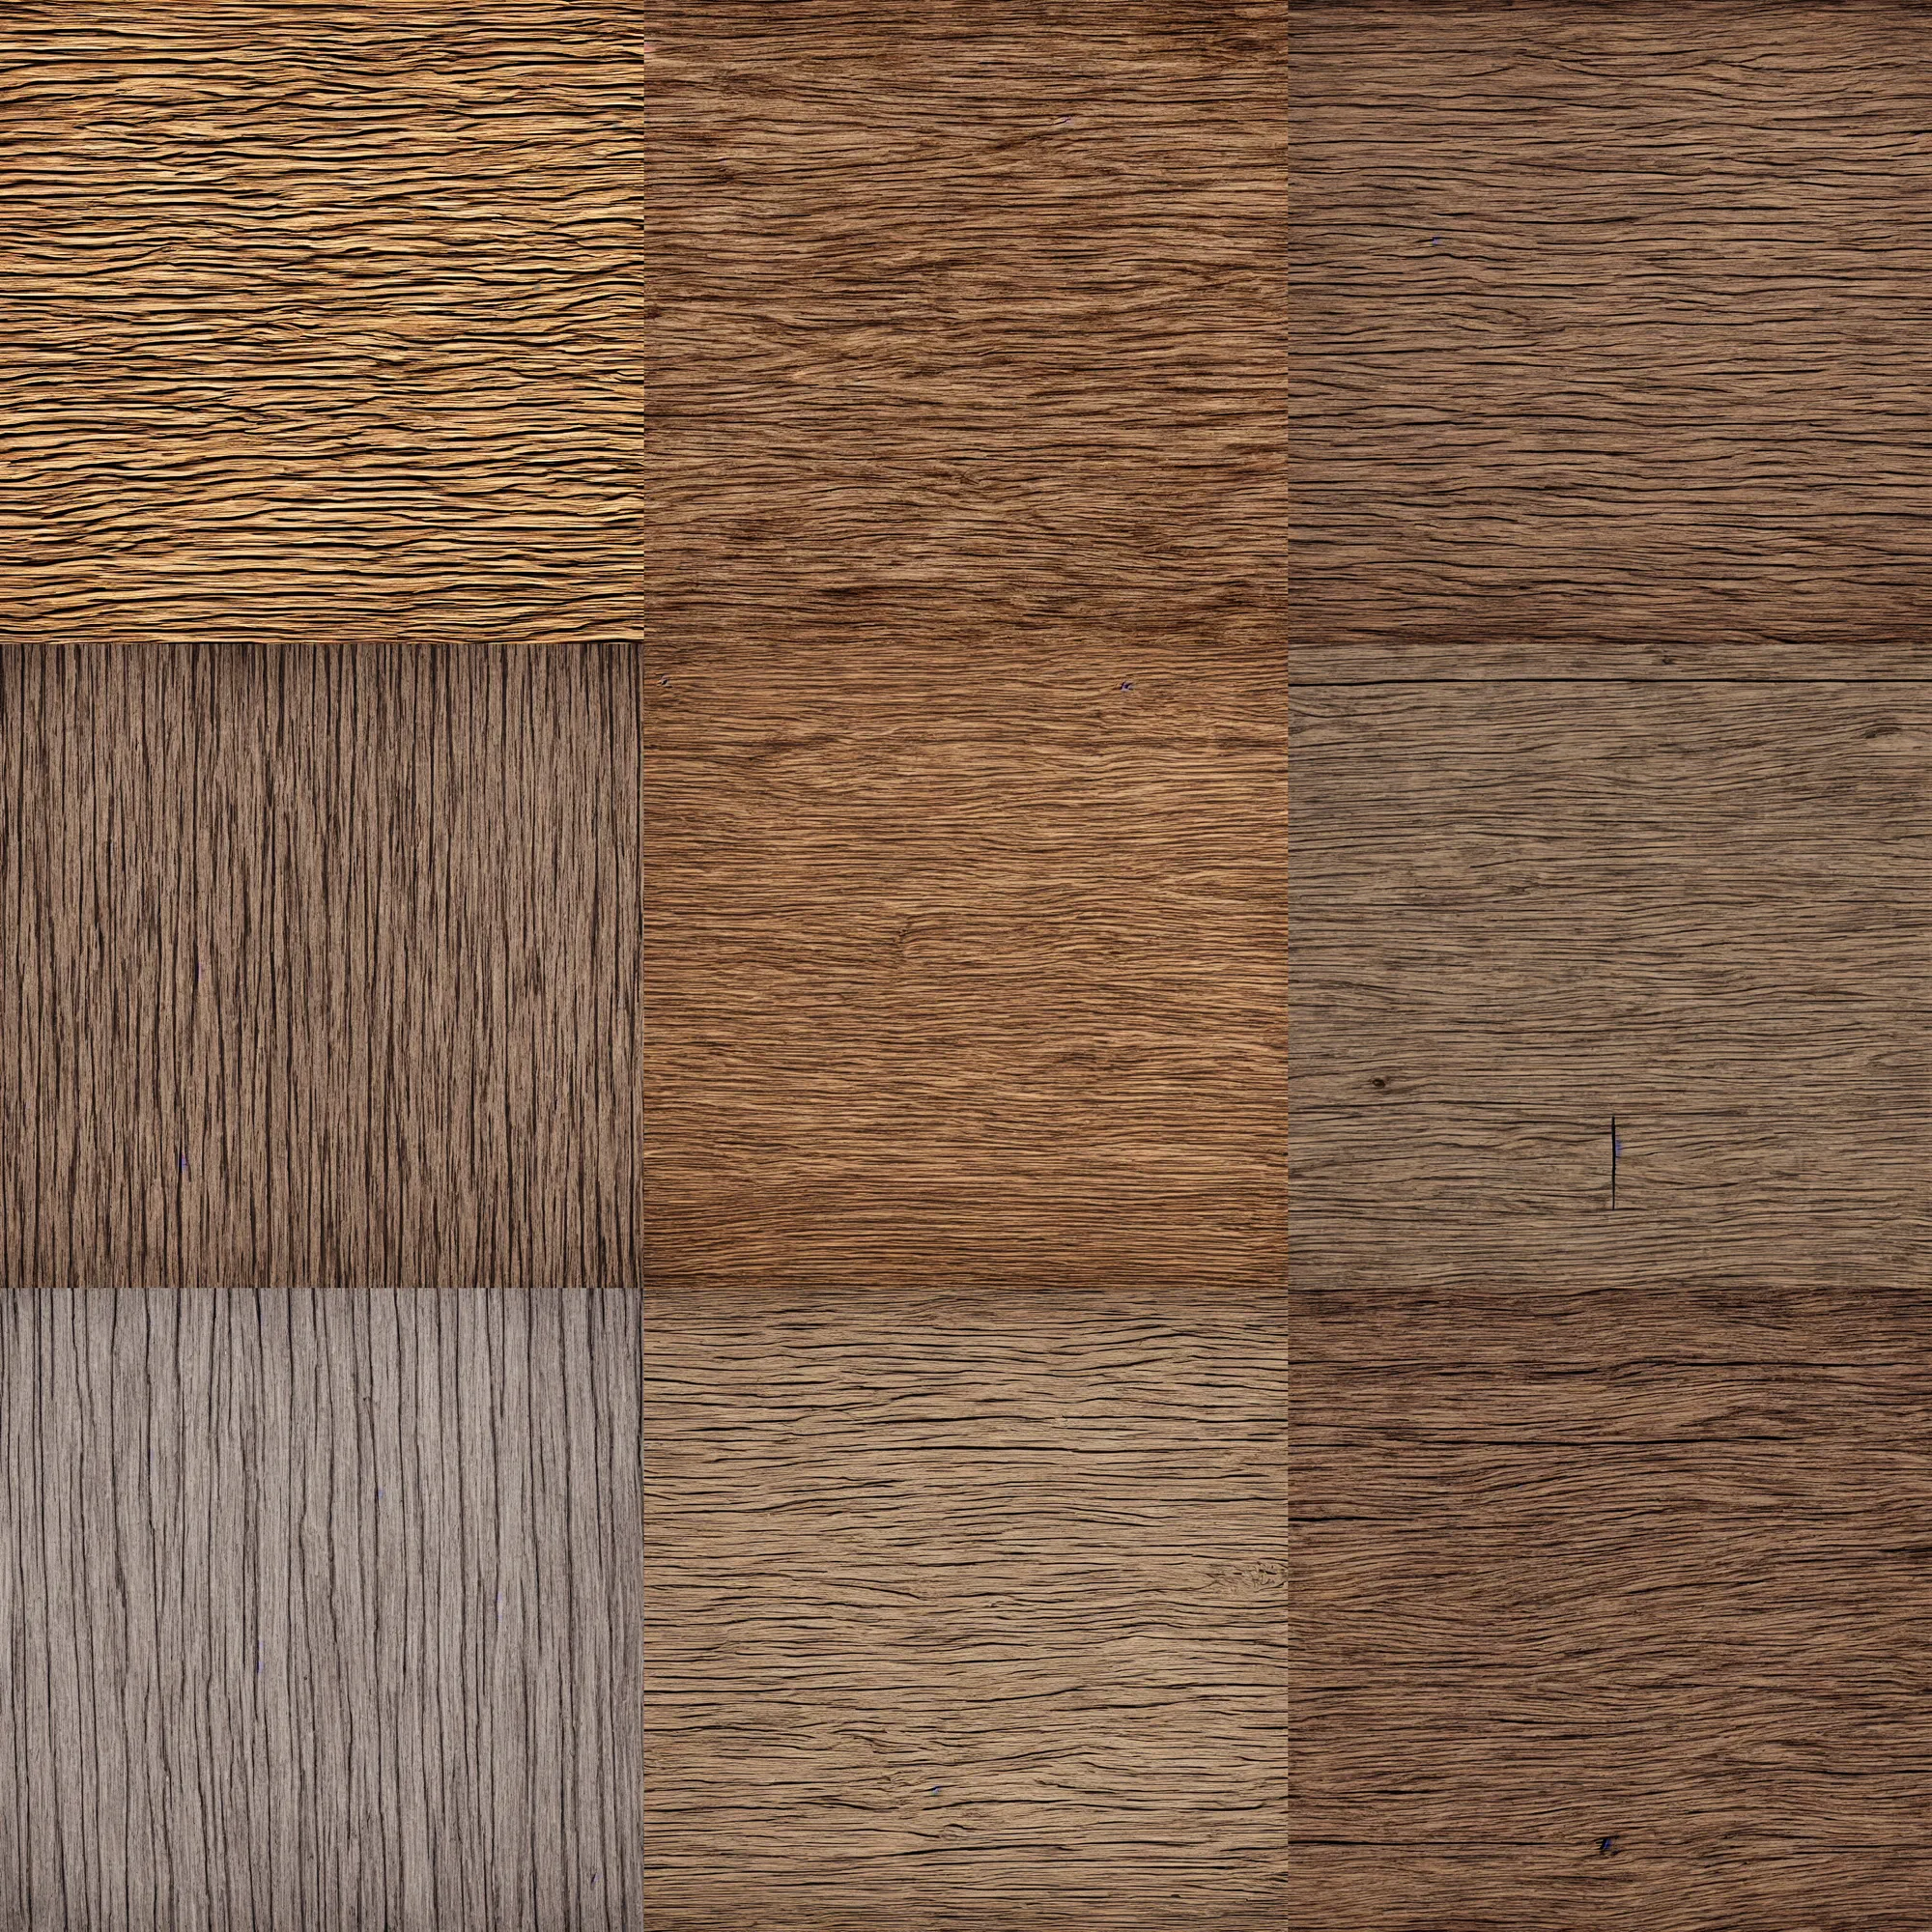 Prompt: wooden planks texture